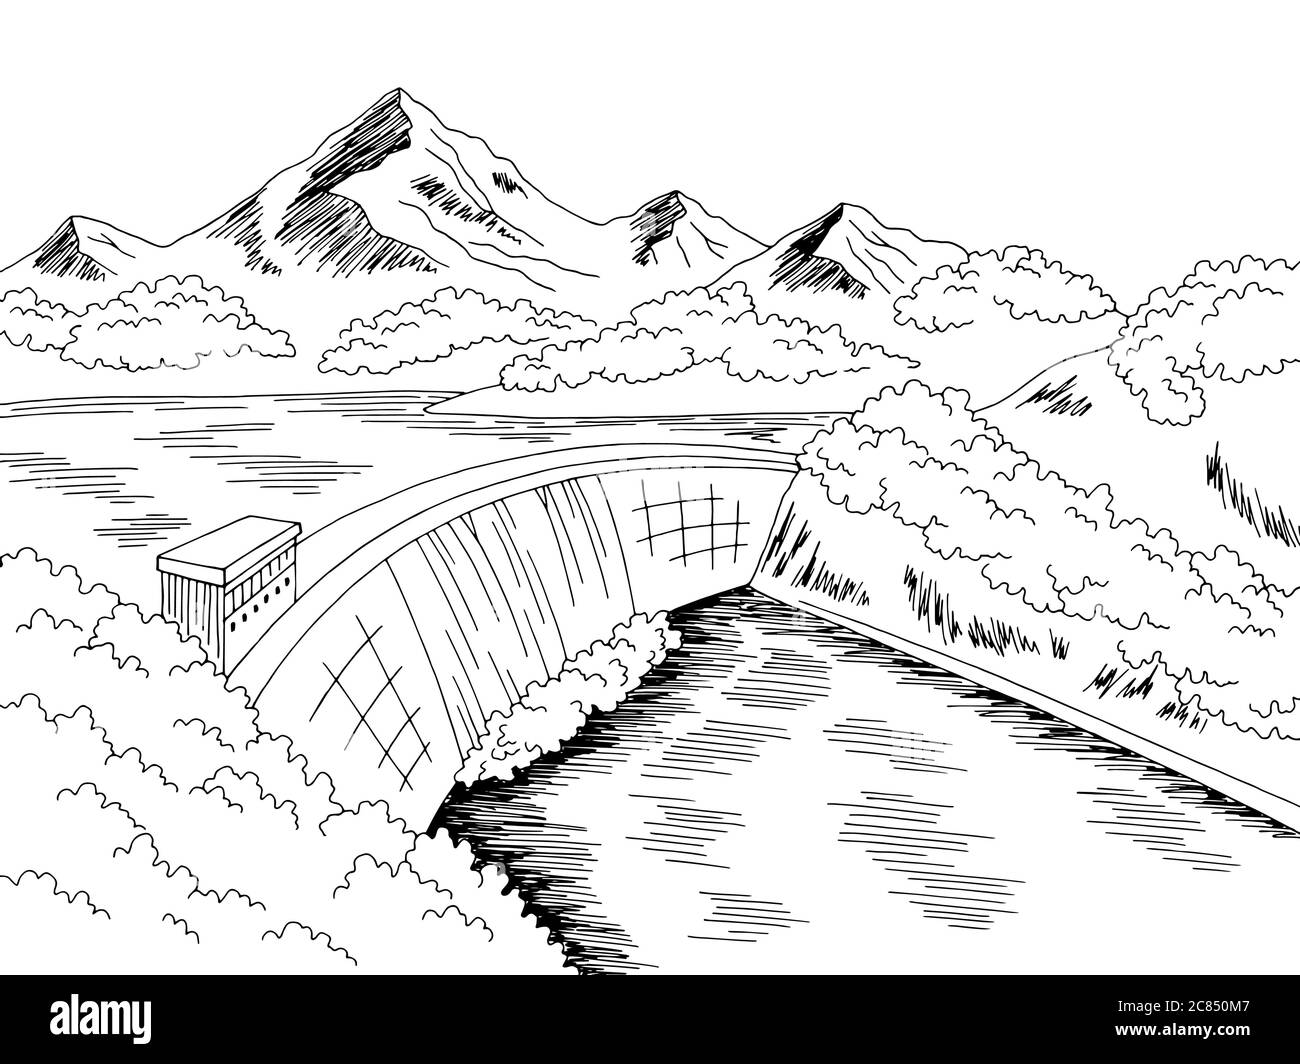 Damm Wasserkraft Fluss Grafik schwarz weiß Landschaft Skizze Illustration Vektor Stock Vektor